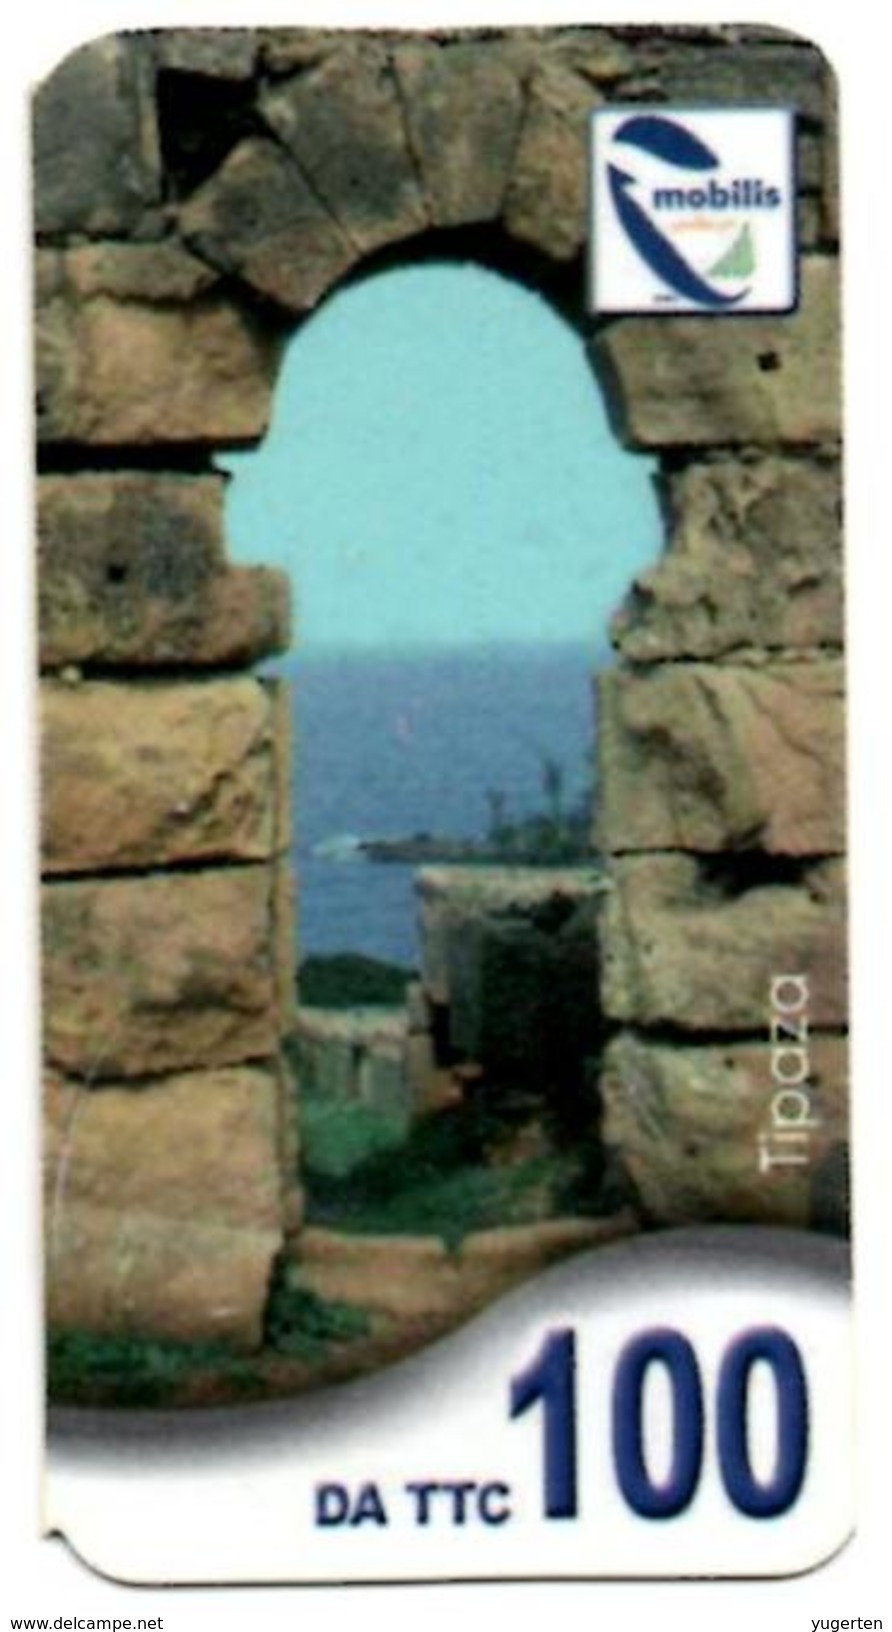 Phonecard Télécarte Mobilis Algérie Algeria - Tipaza Tipasa Roman Ruins Telefonkarte Telefonica - Algerije